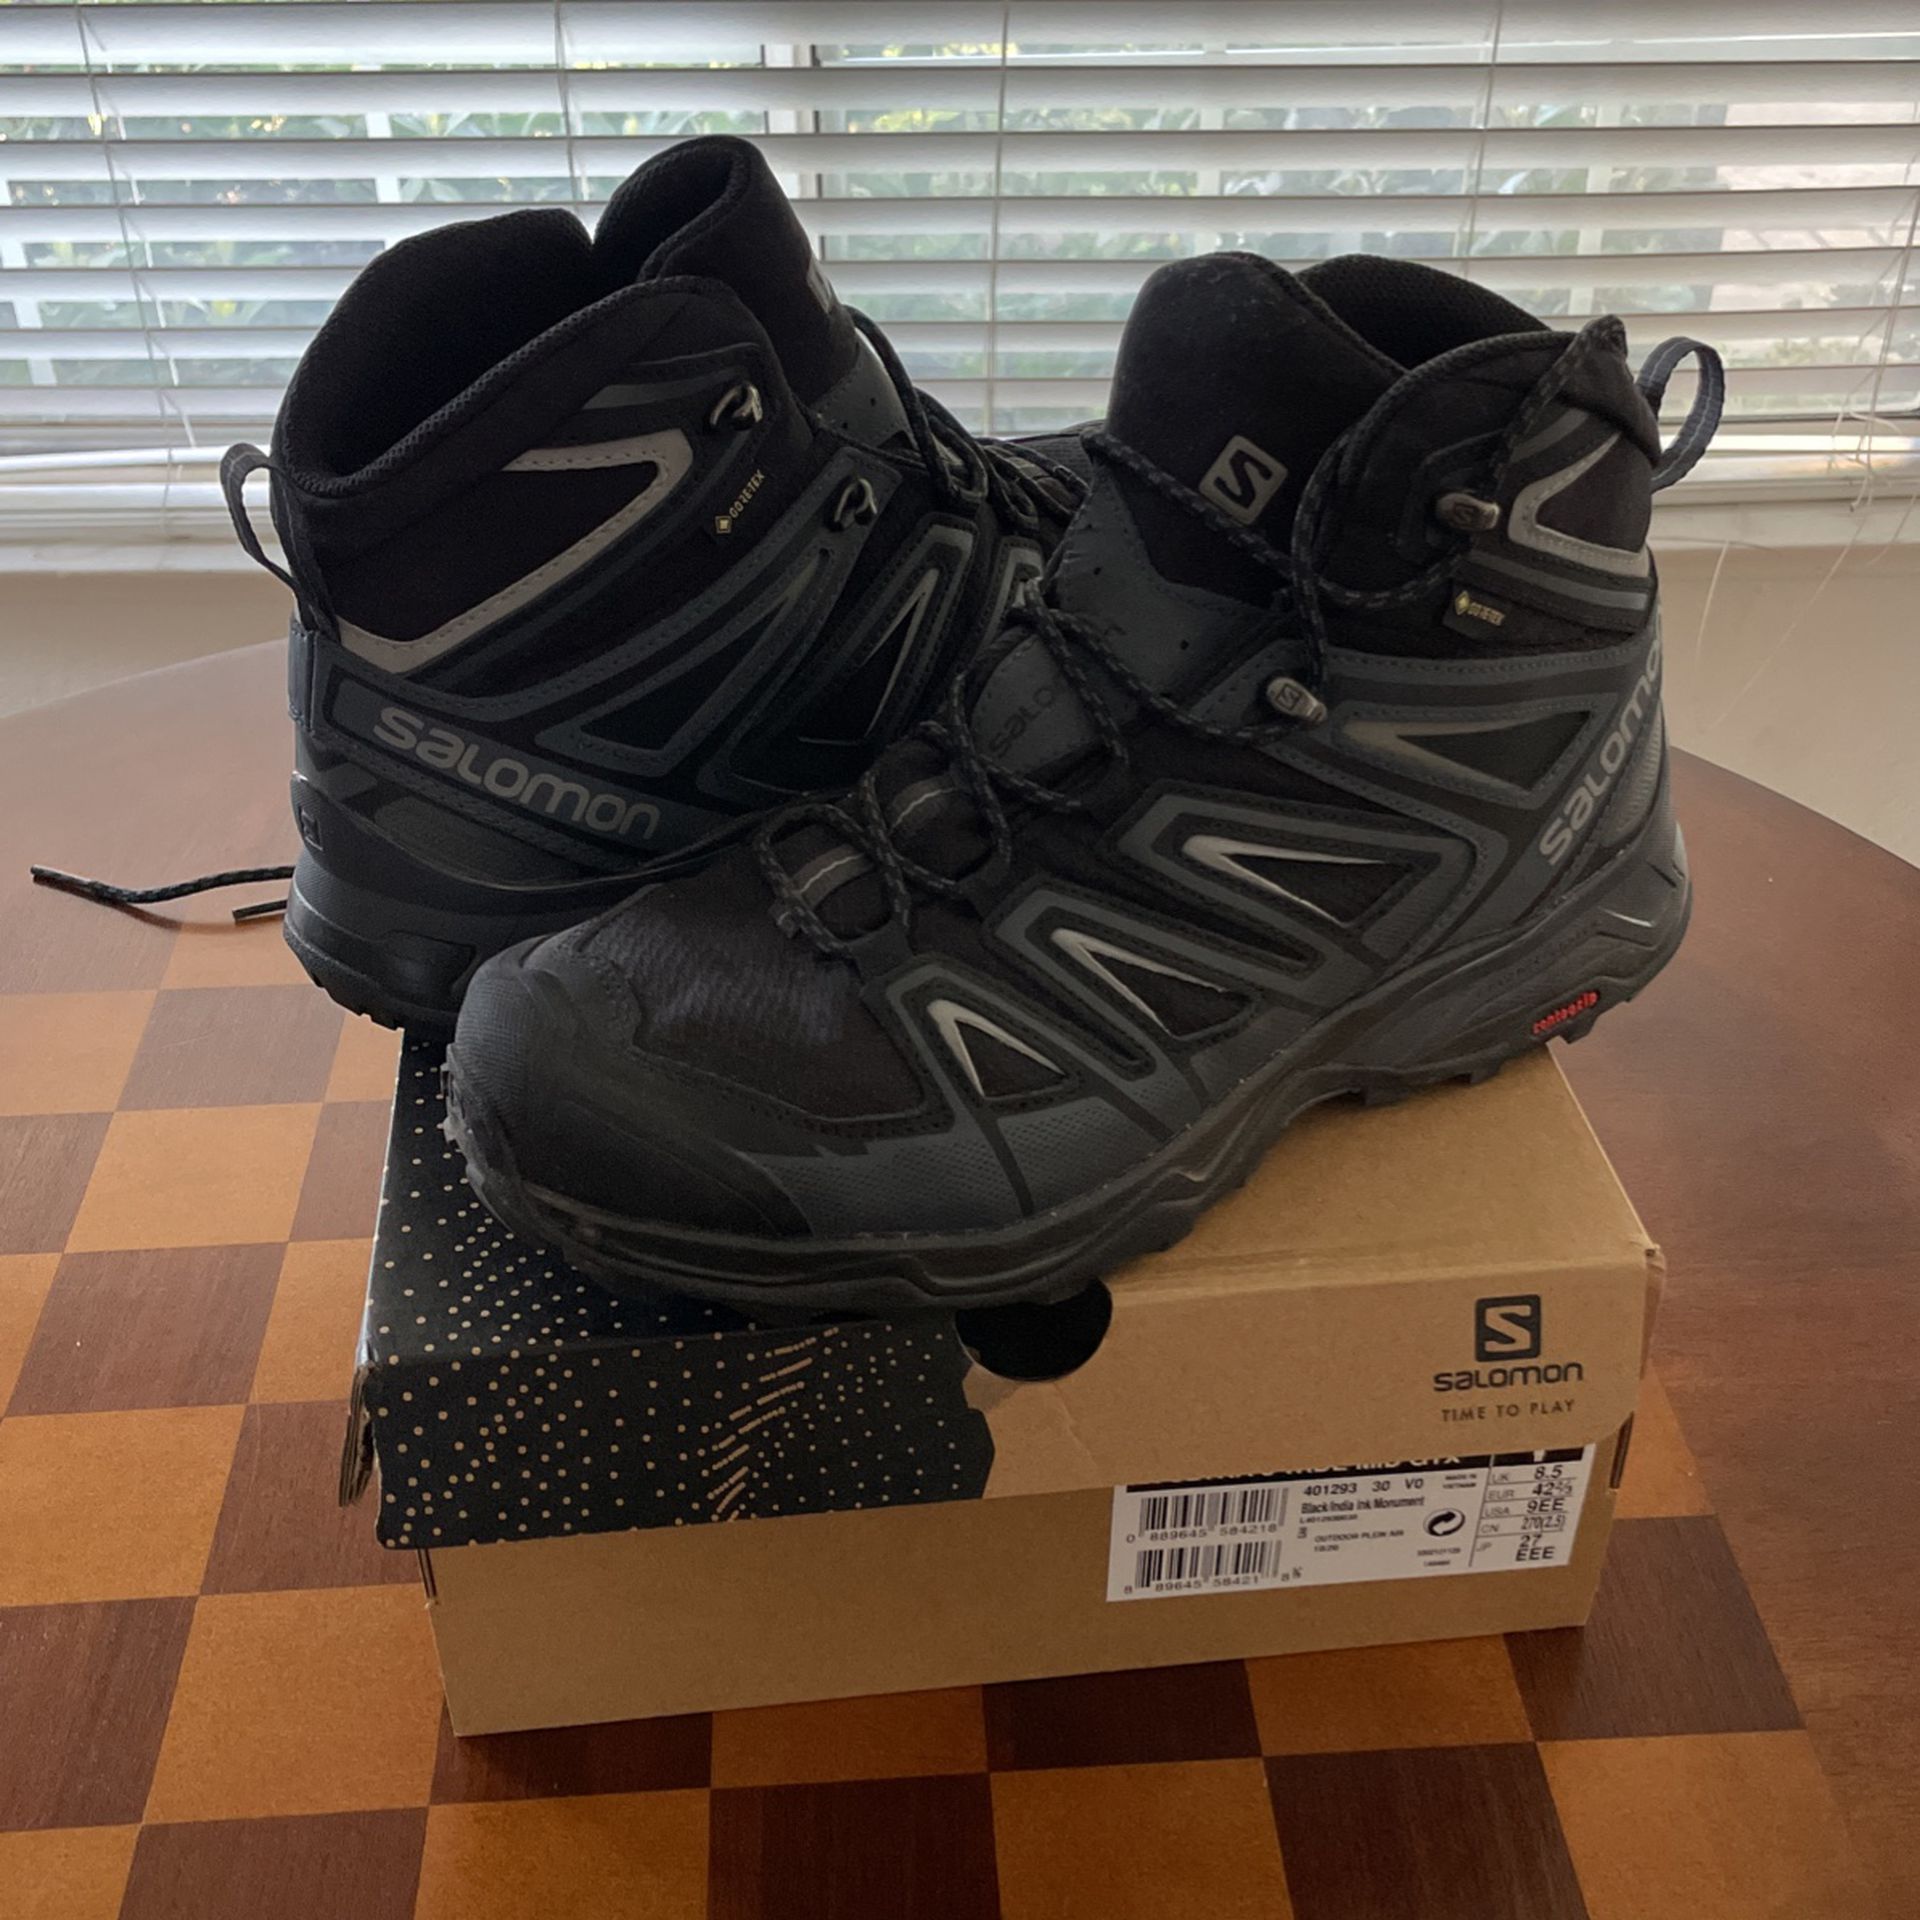 Solomon X Ultra 3 Mid GTX Hiking Boots Men’s Size 9 Wide Black